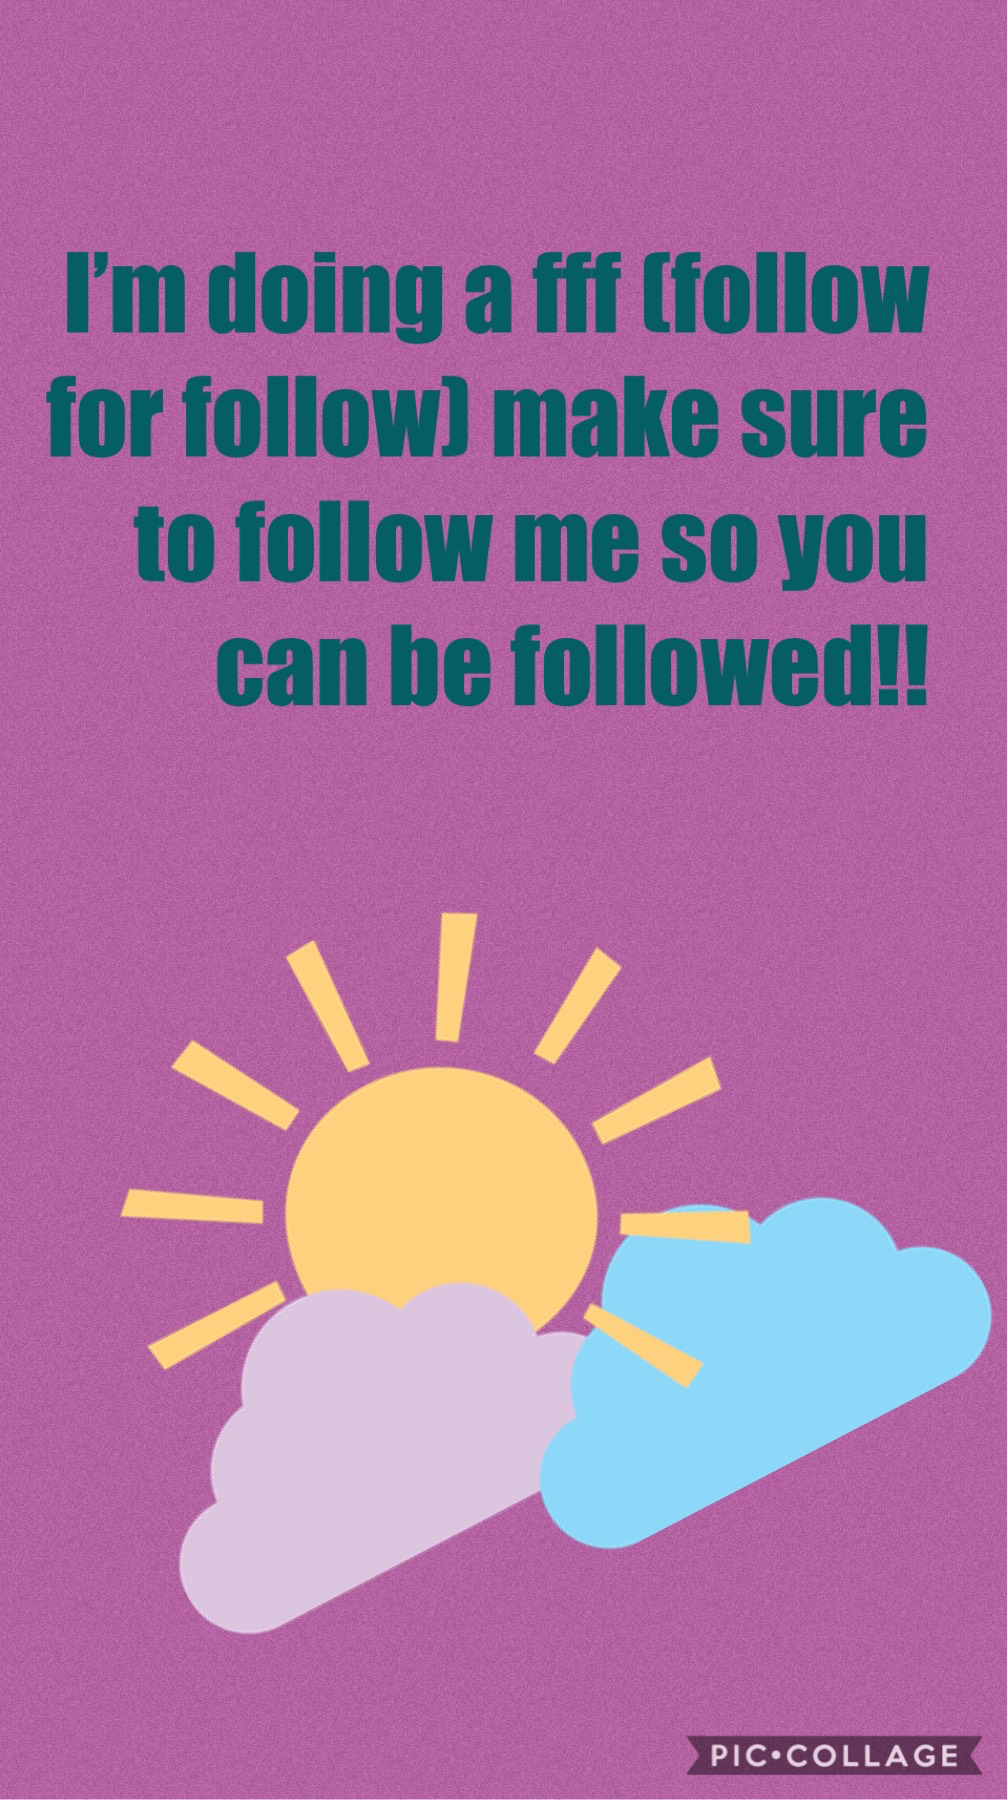 Make sure to follow 